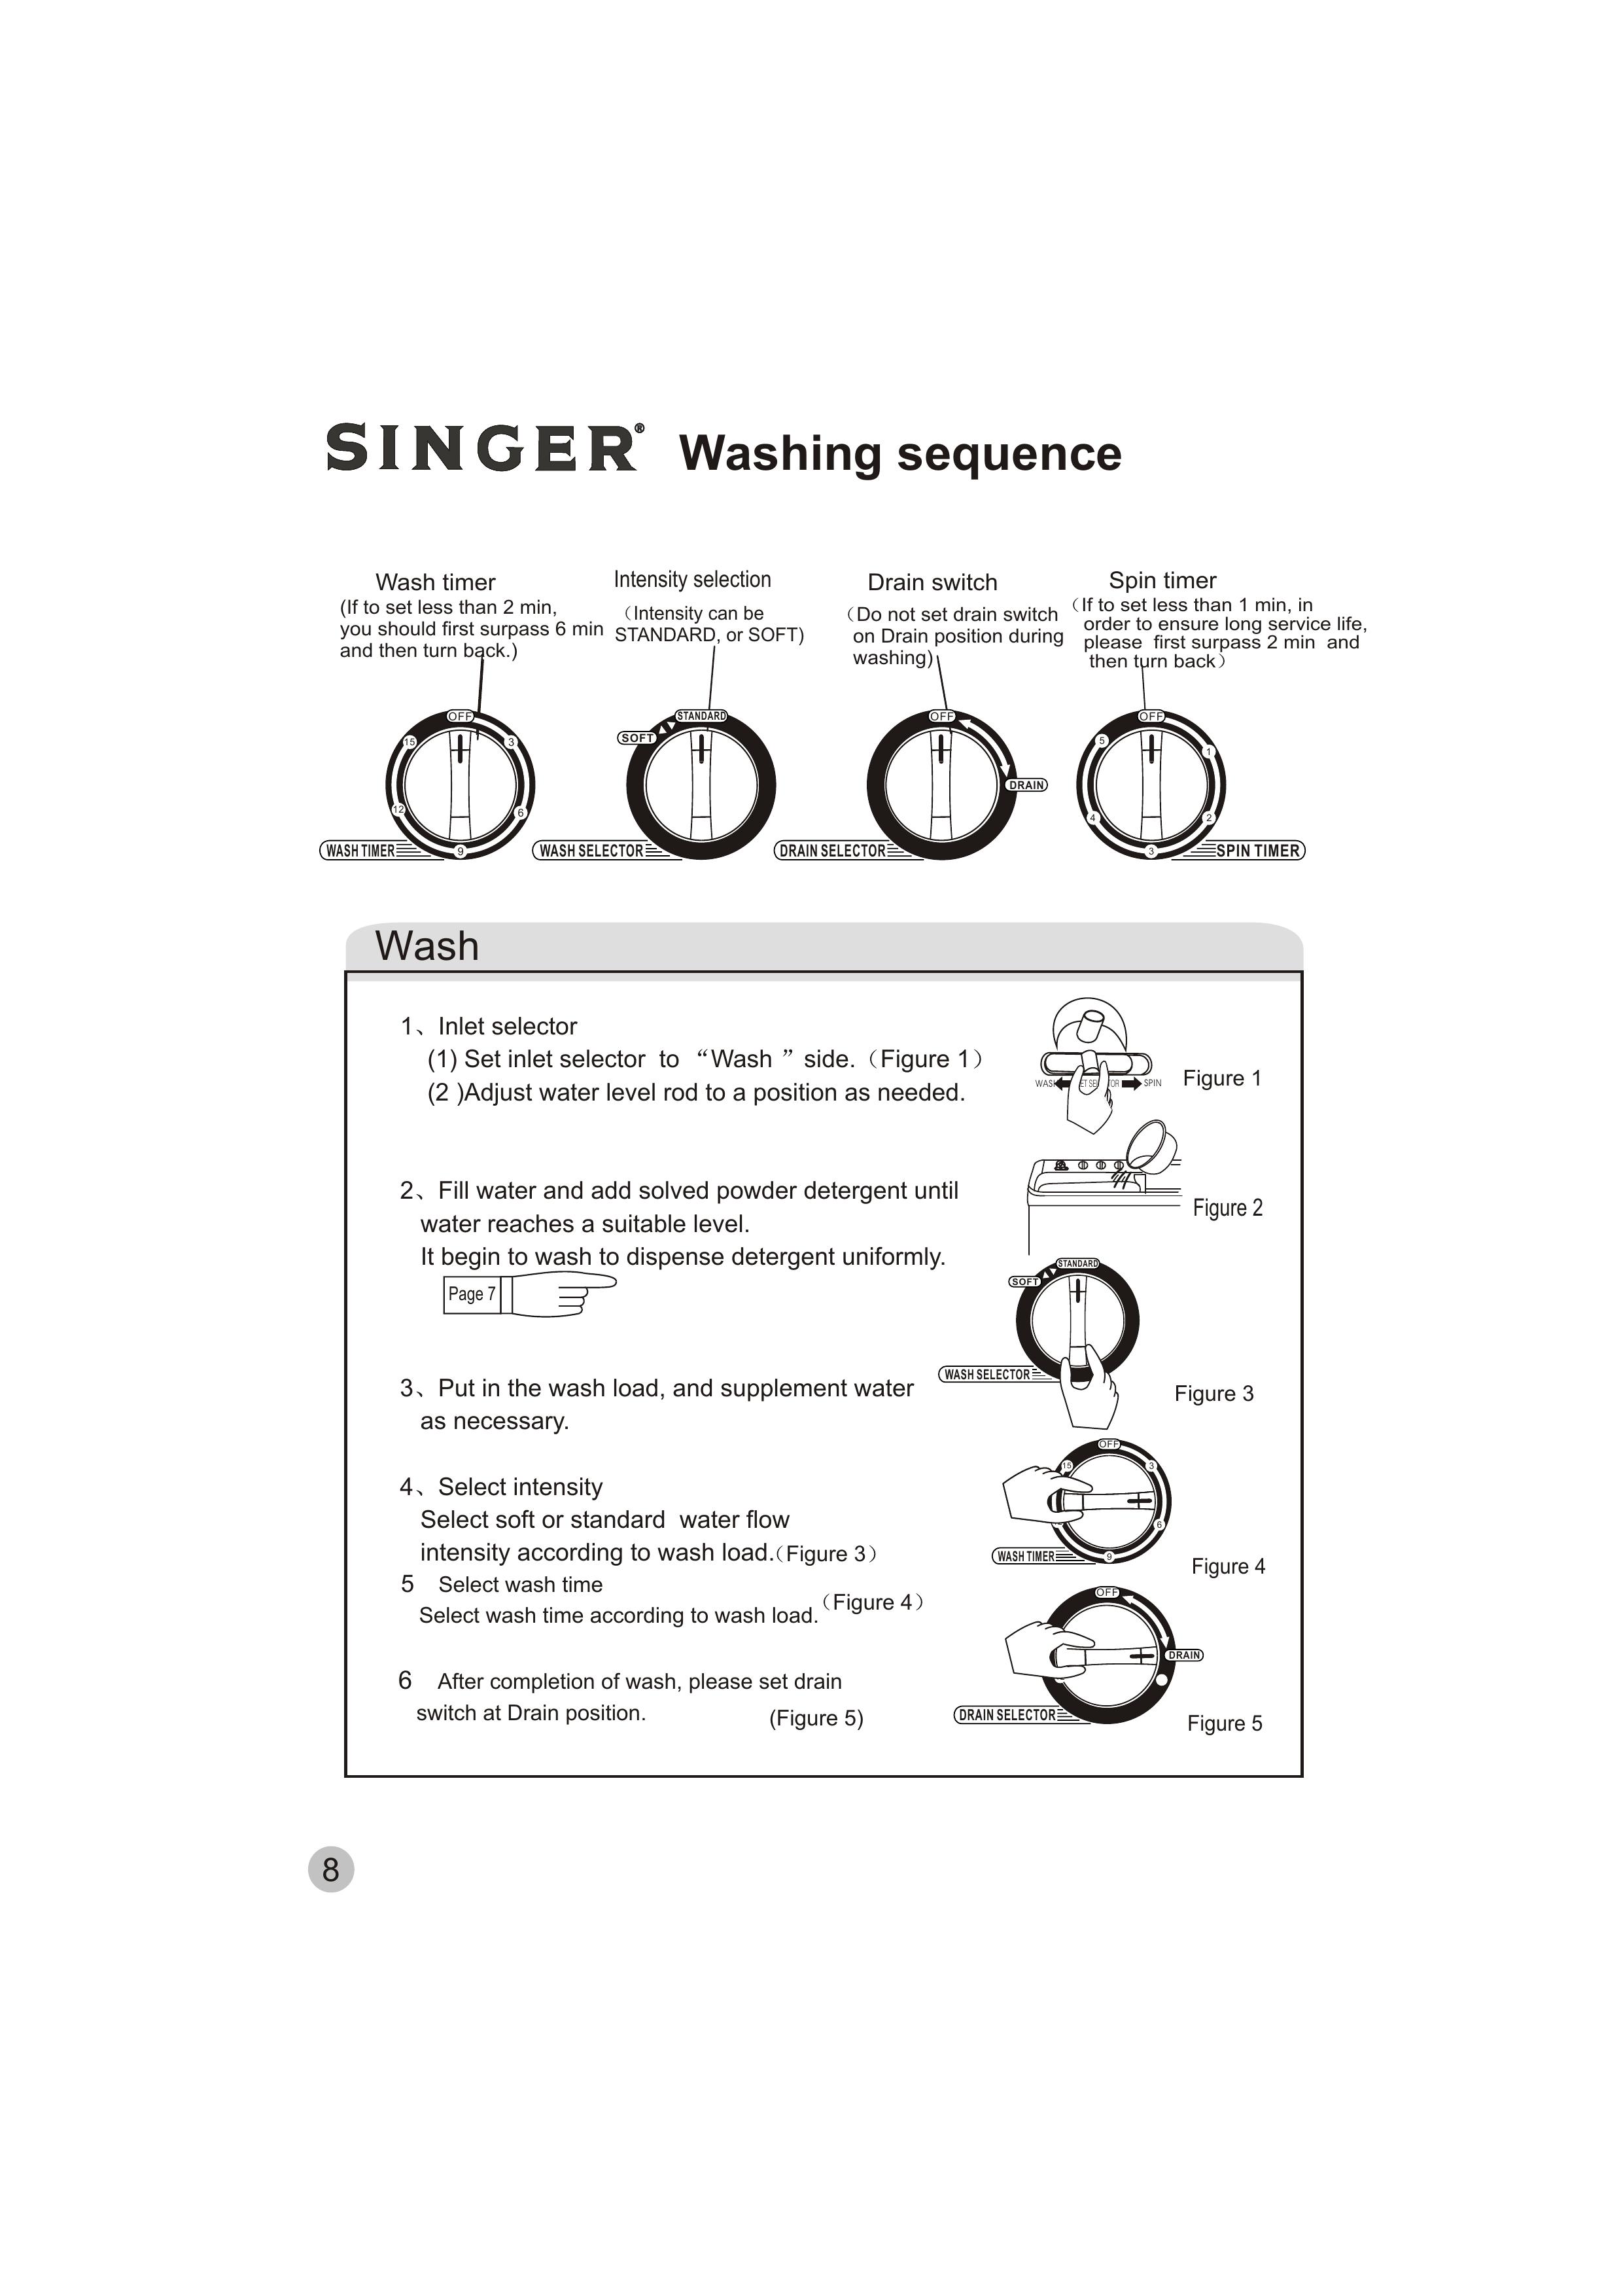 Singer WT5113 Washer/Dryer User Manual (Page 9)